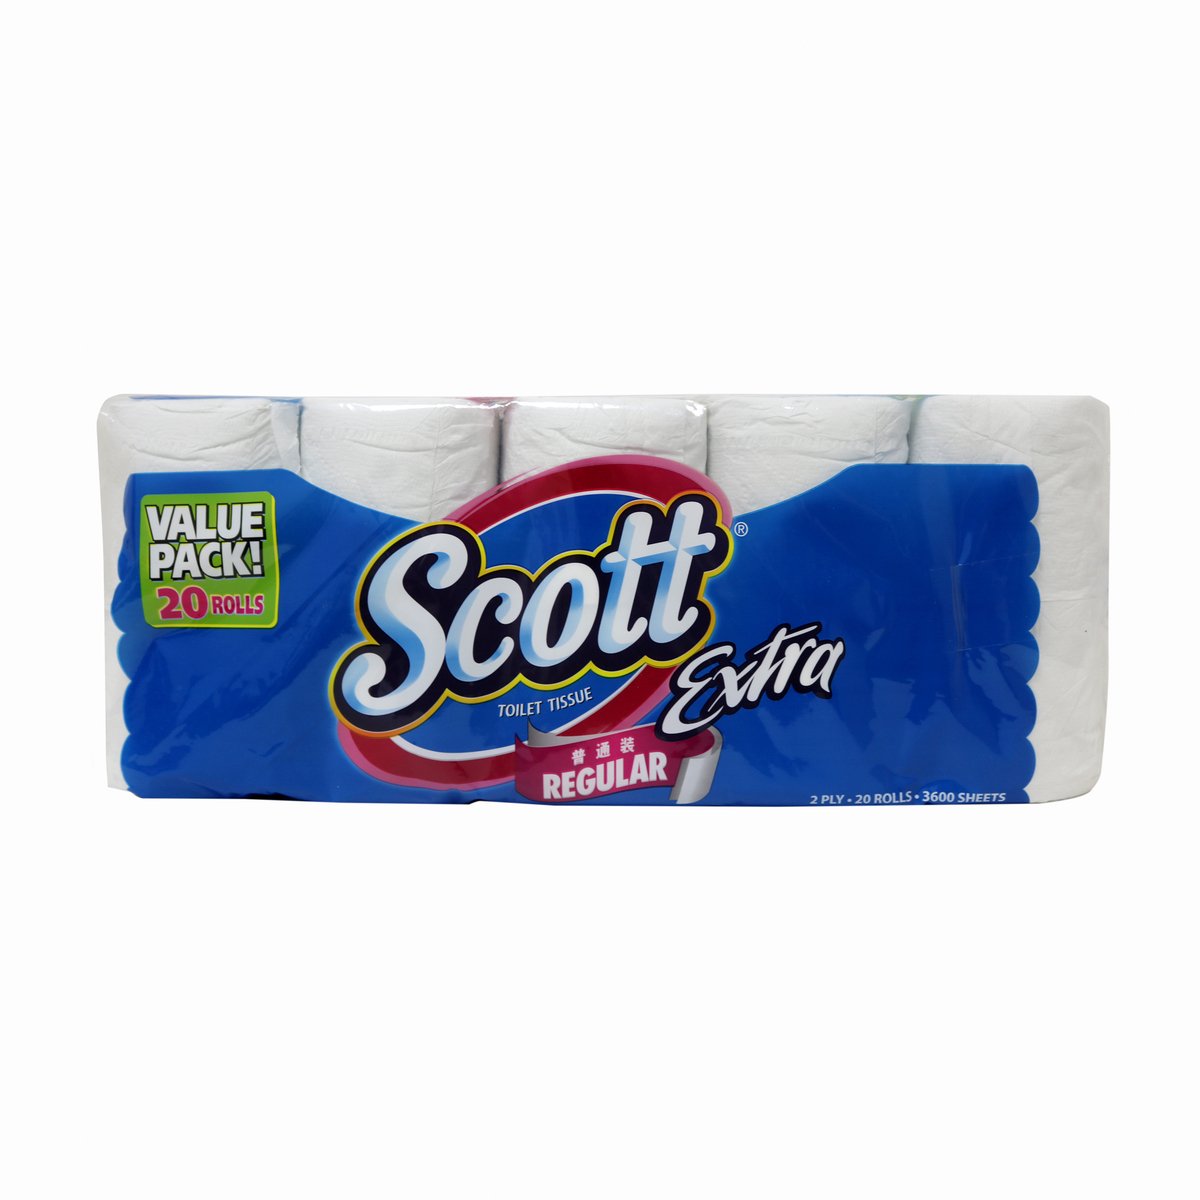 Scott Extra Toilets Roll  Regular 20 x 180sheets